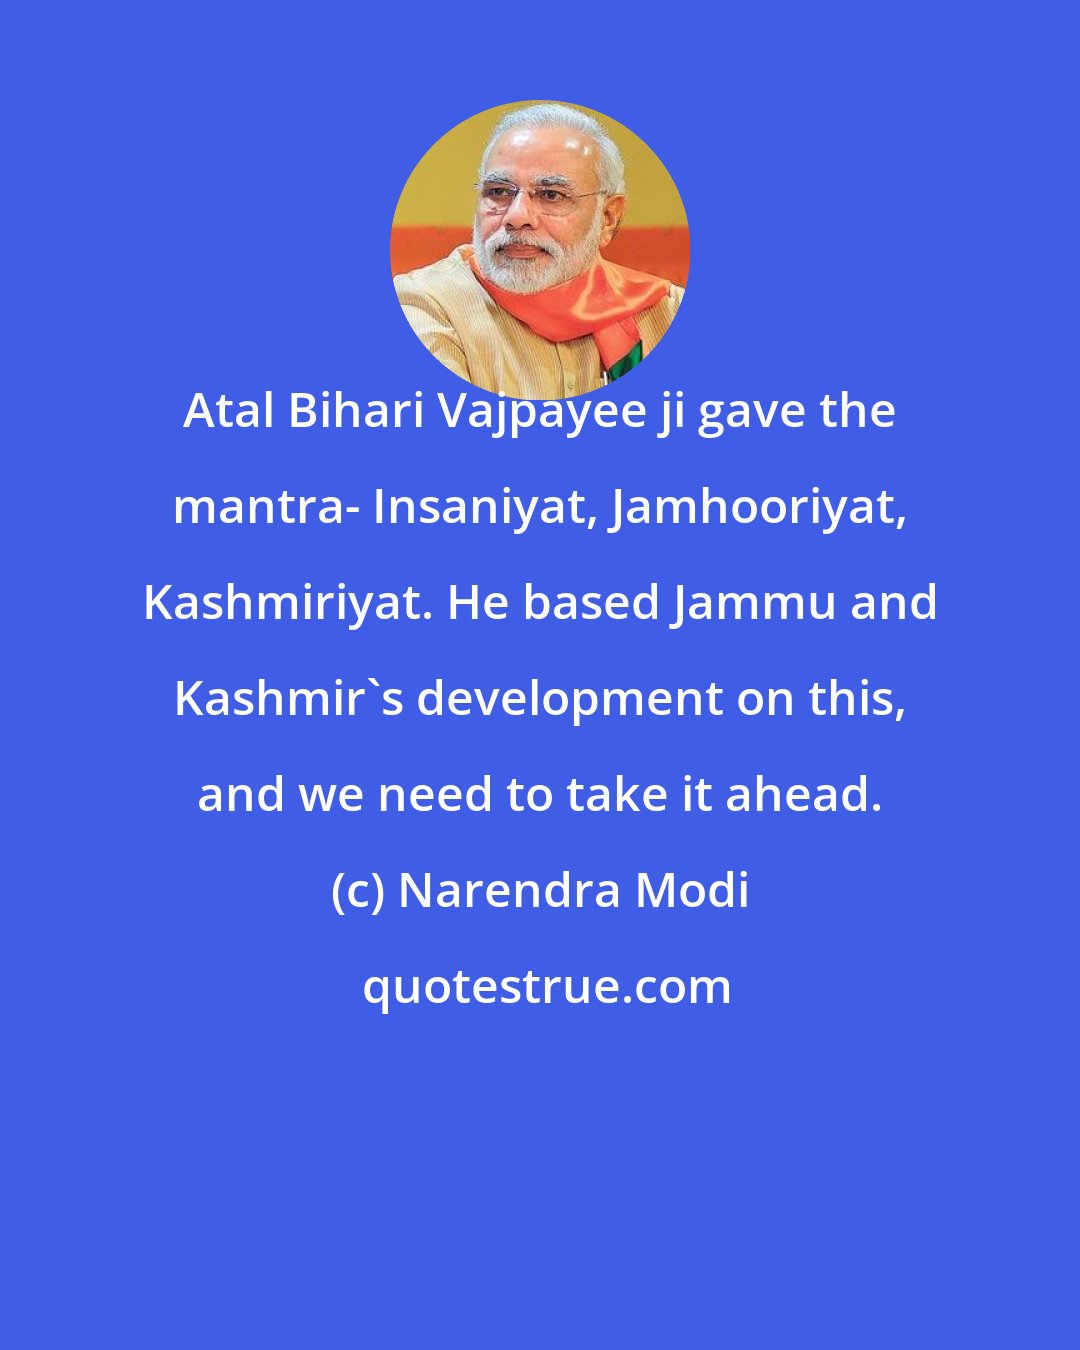 Narendra Modi: Atal Bihari Vajpayee ji gave the mantra- Insaniyat, Jamhooriyat, Kashmiriyat. He based Jammu and Kashmir's development on this, and we need to take it ahead.